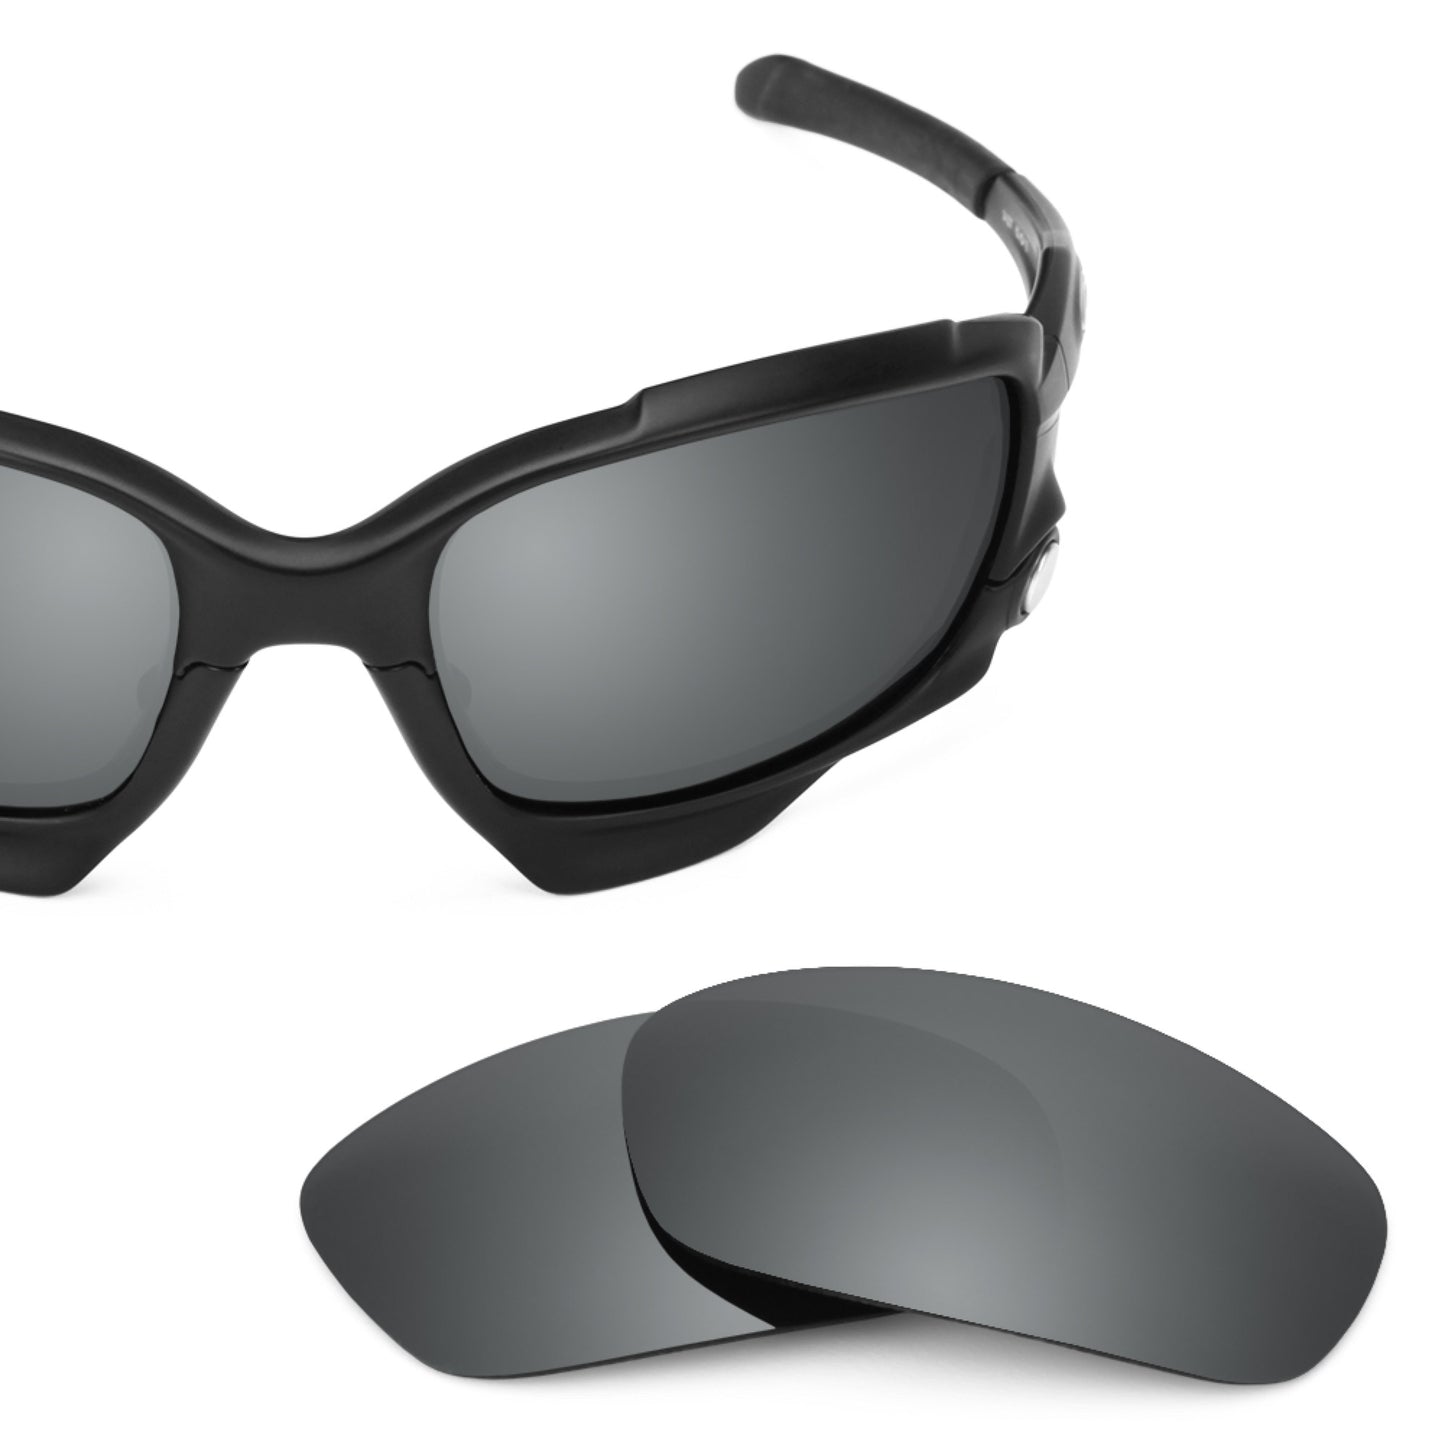 Revant replacement lenses for Oakley Racing Jacket (Low Bridge Fit) Non-Polarized Black Chrome